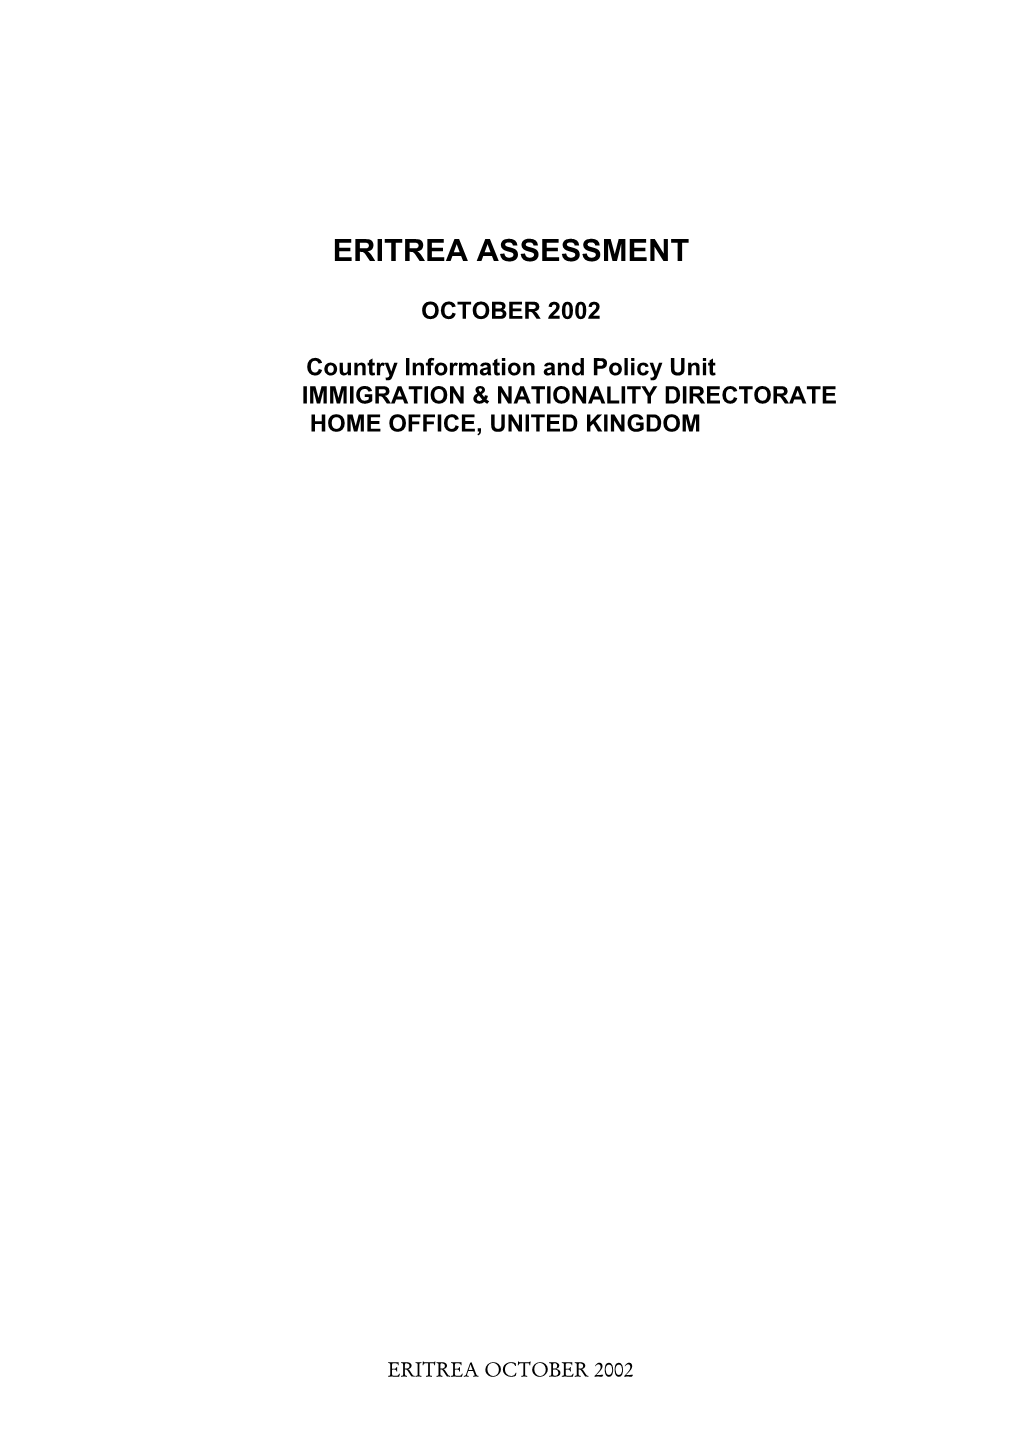 Eritrea Assessment